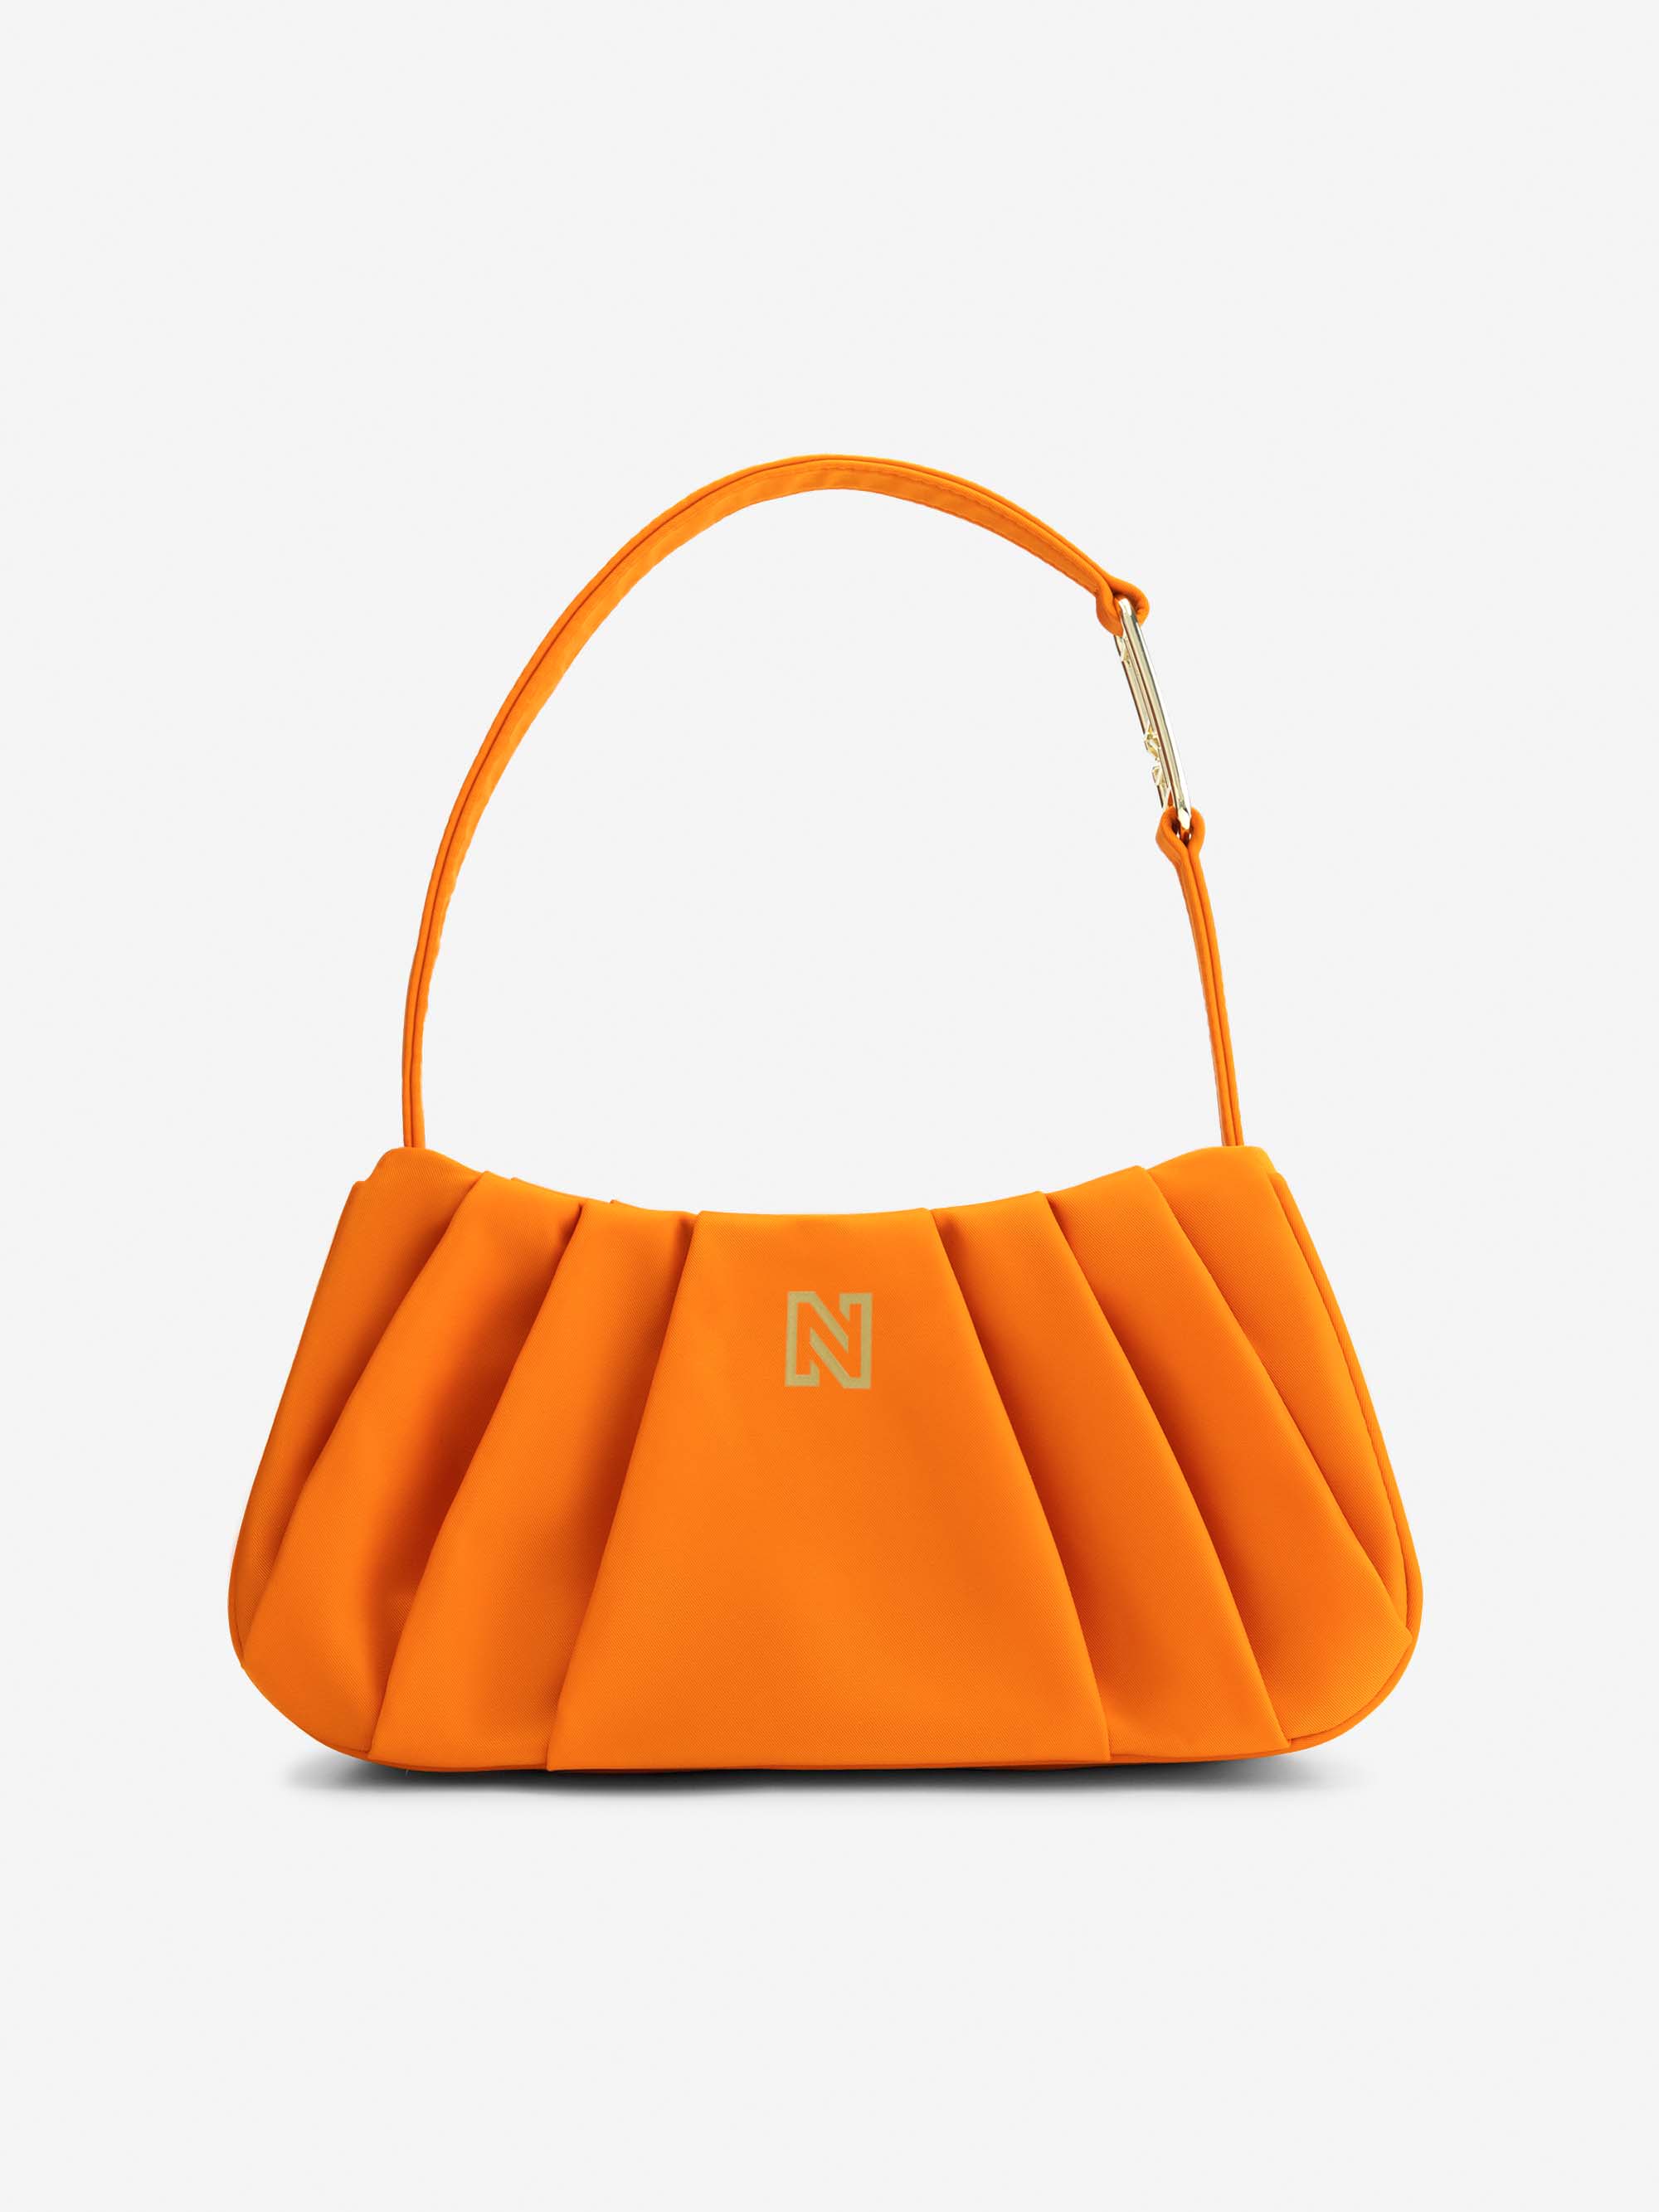 Shoulderbag with N logo plate 